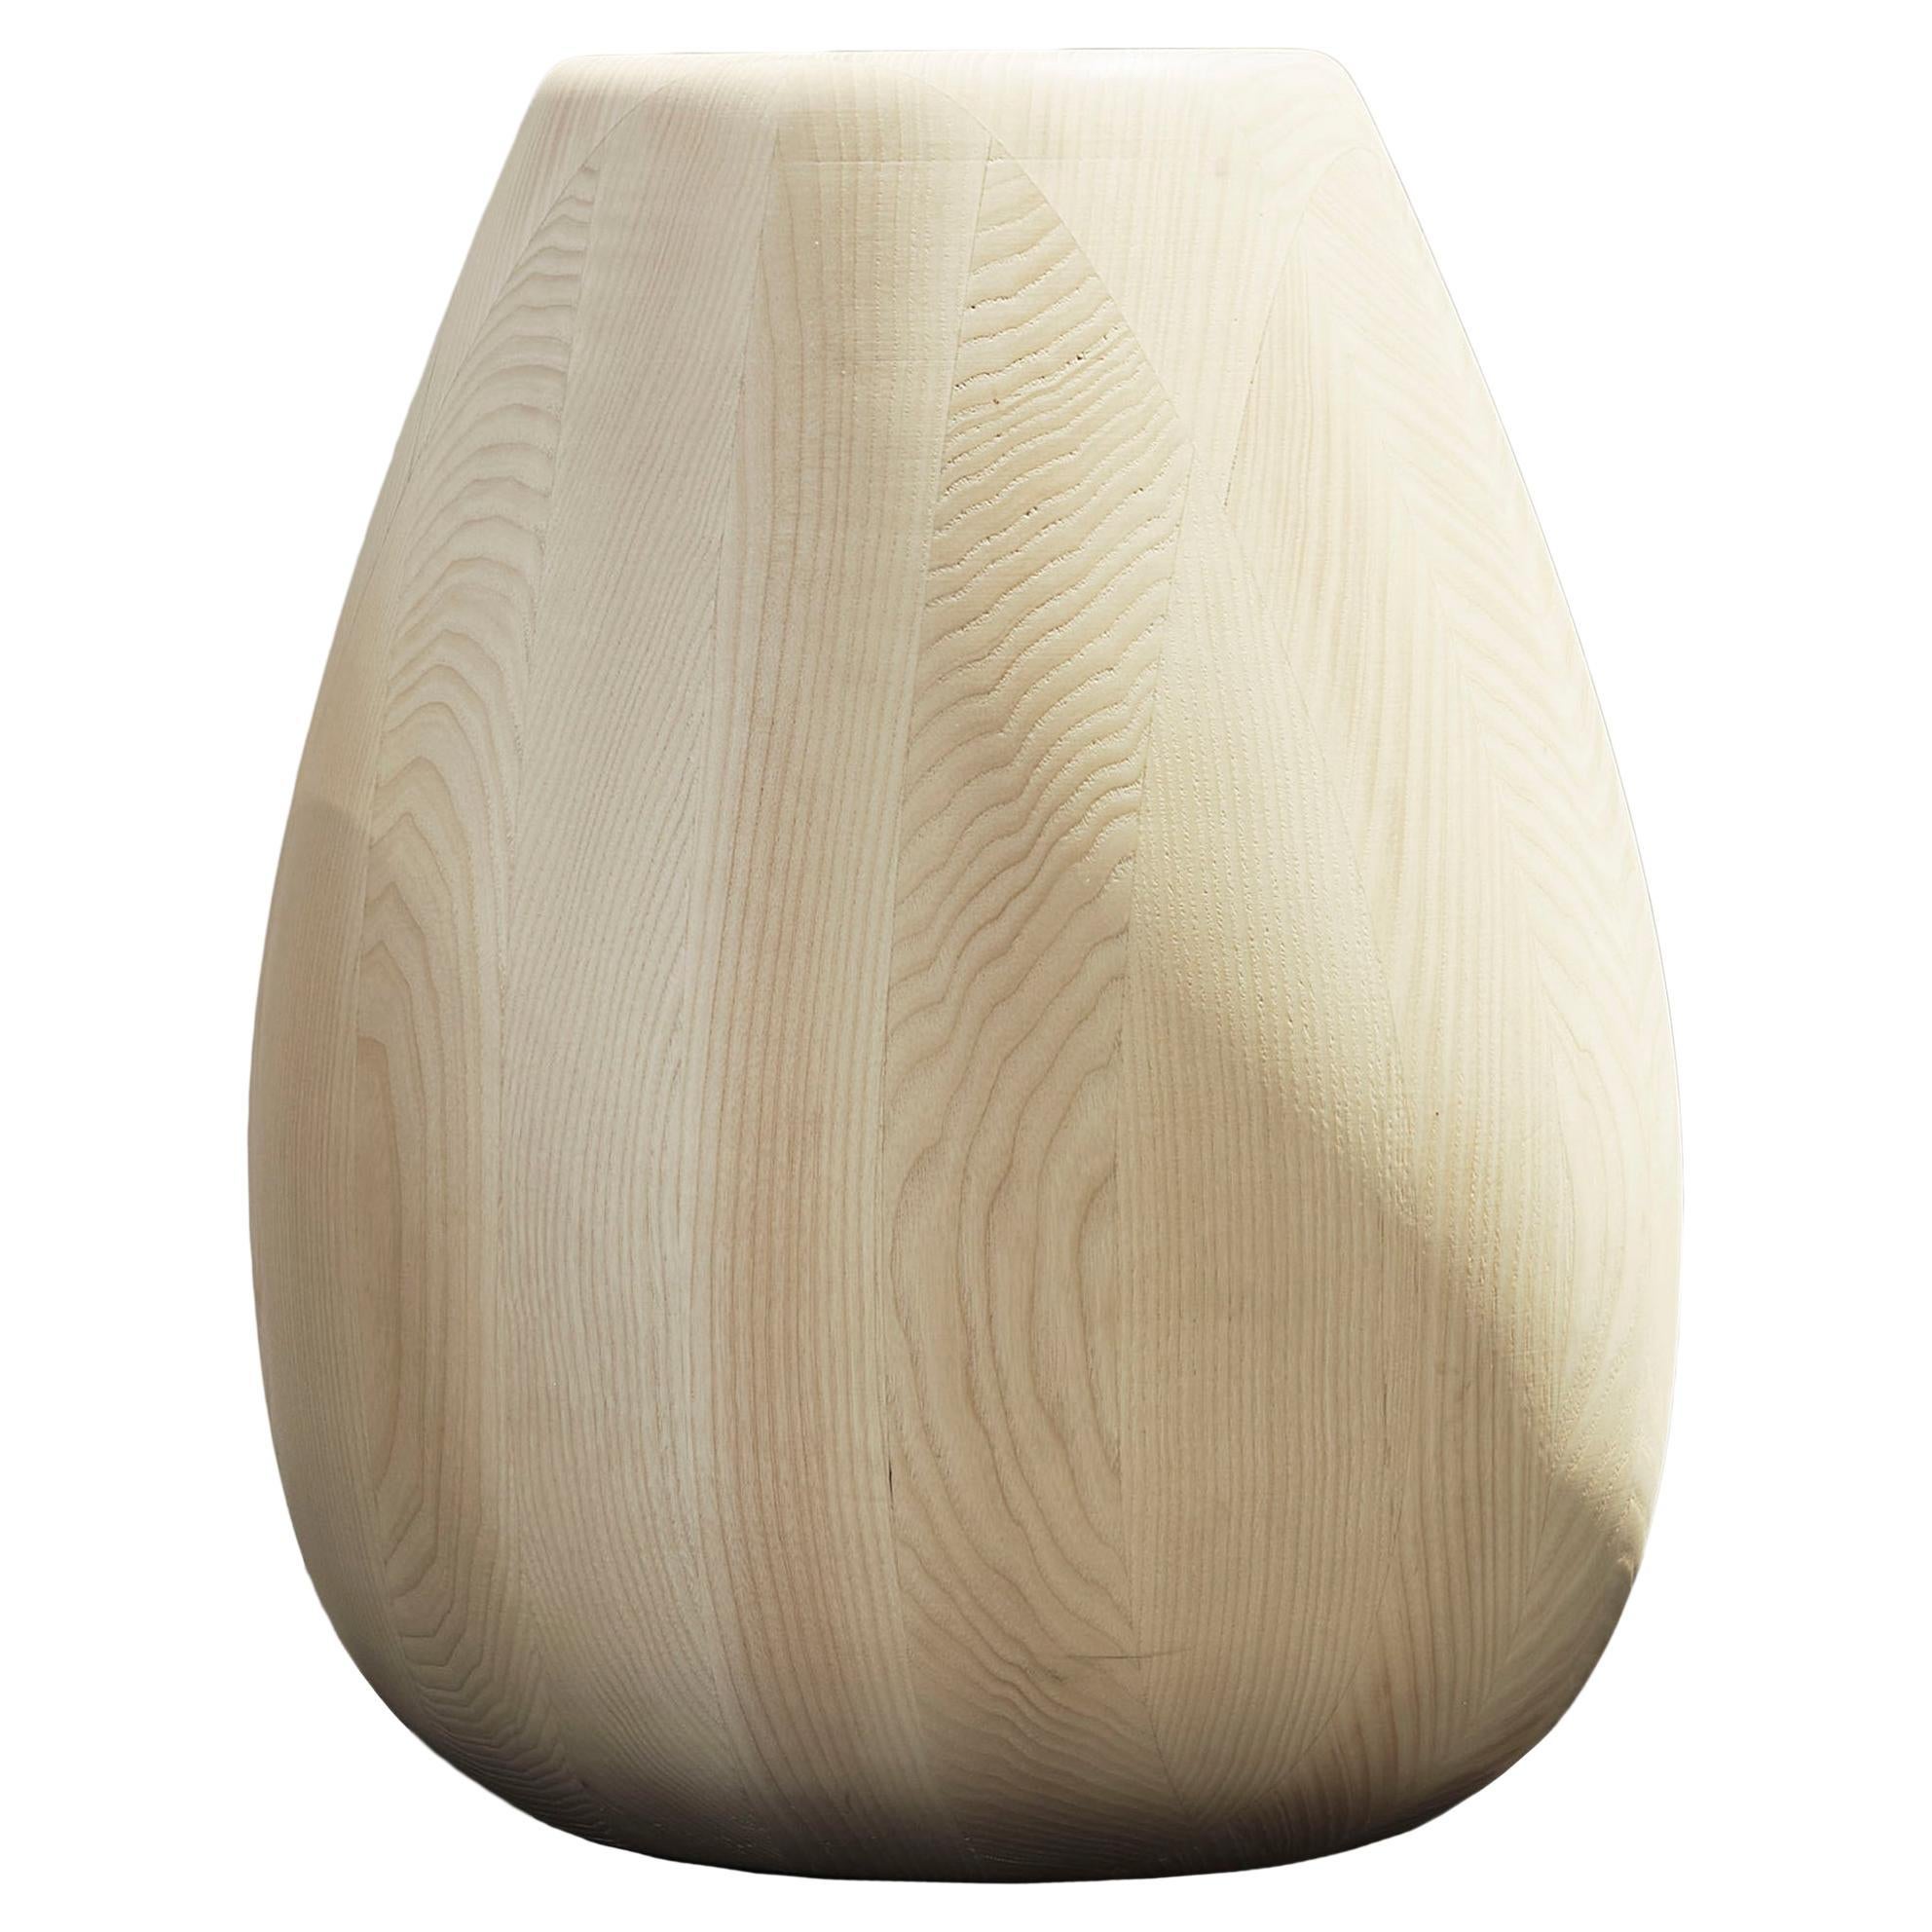 Ash Wood Vase h50 design Franco Albini - edit by Officina della Scala For Sale